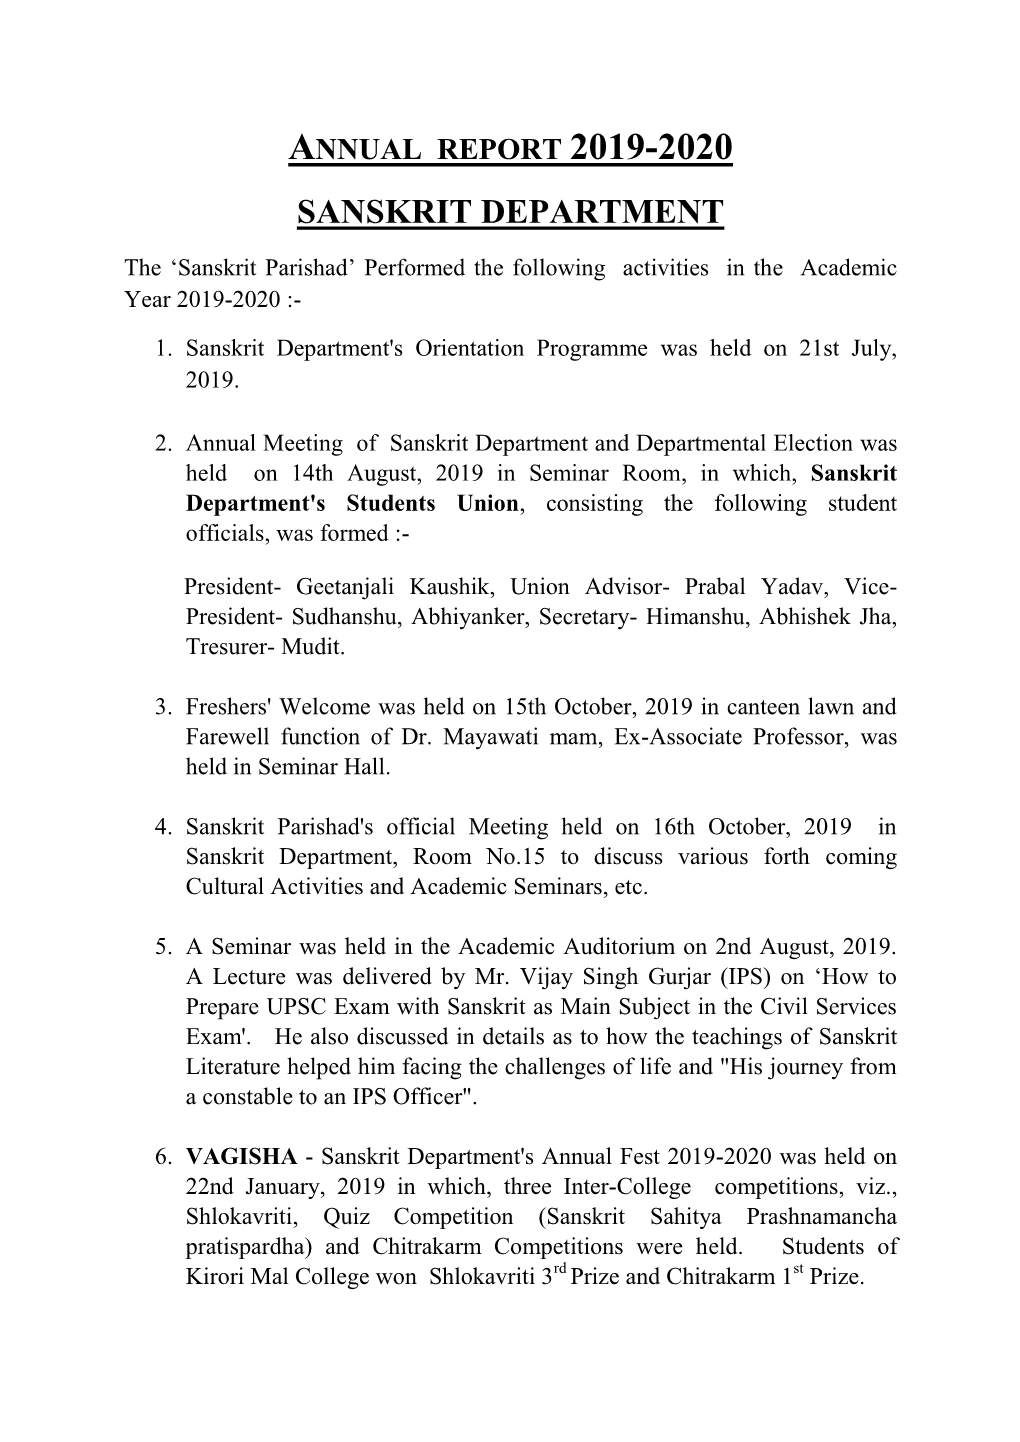 Annual Report 2019-2020 Sanskrit Department